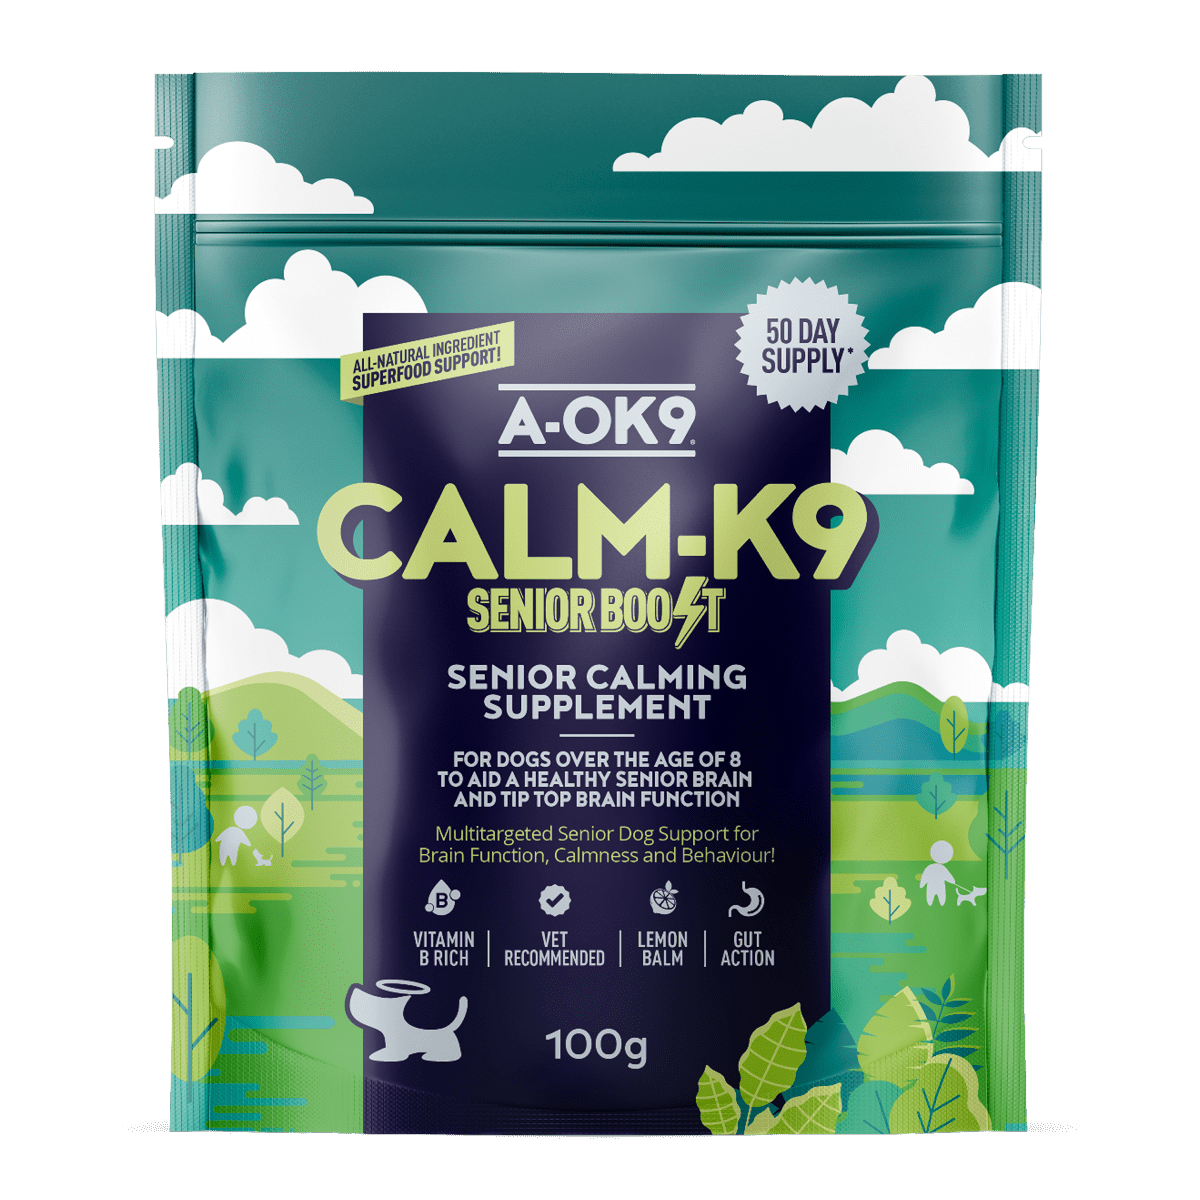 CALM-K9 Senior Dog Supplement